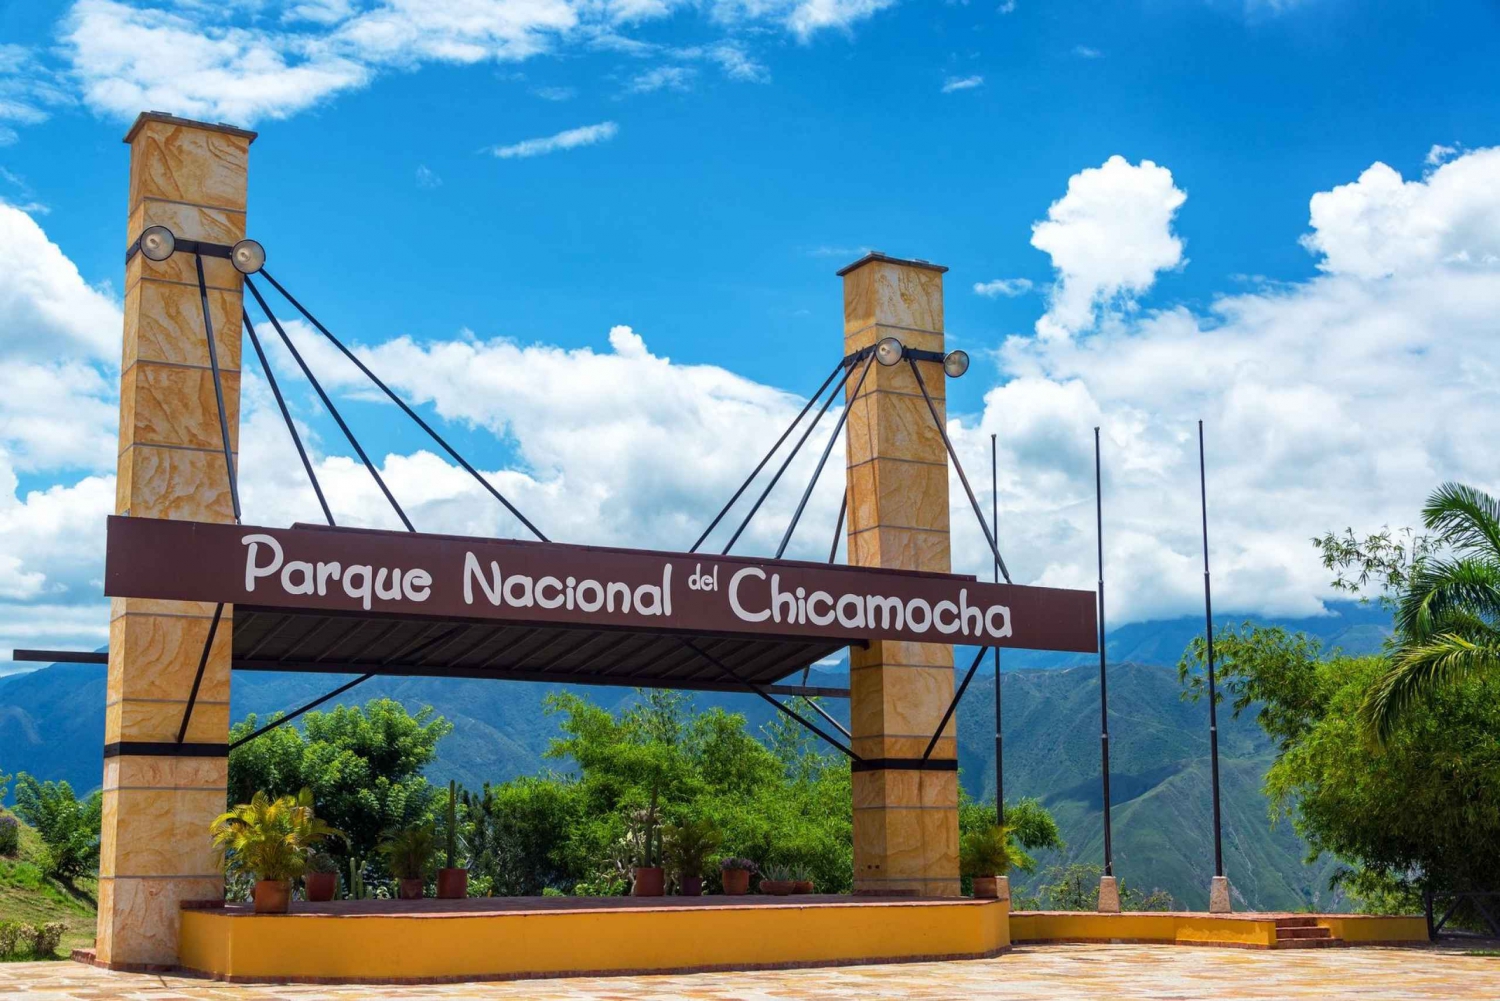 Parque Nacional del Chicamocha Tour (Cable Car included)